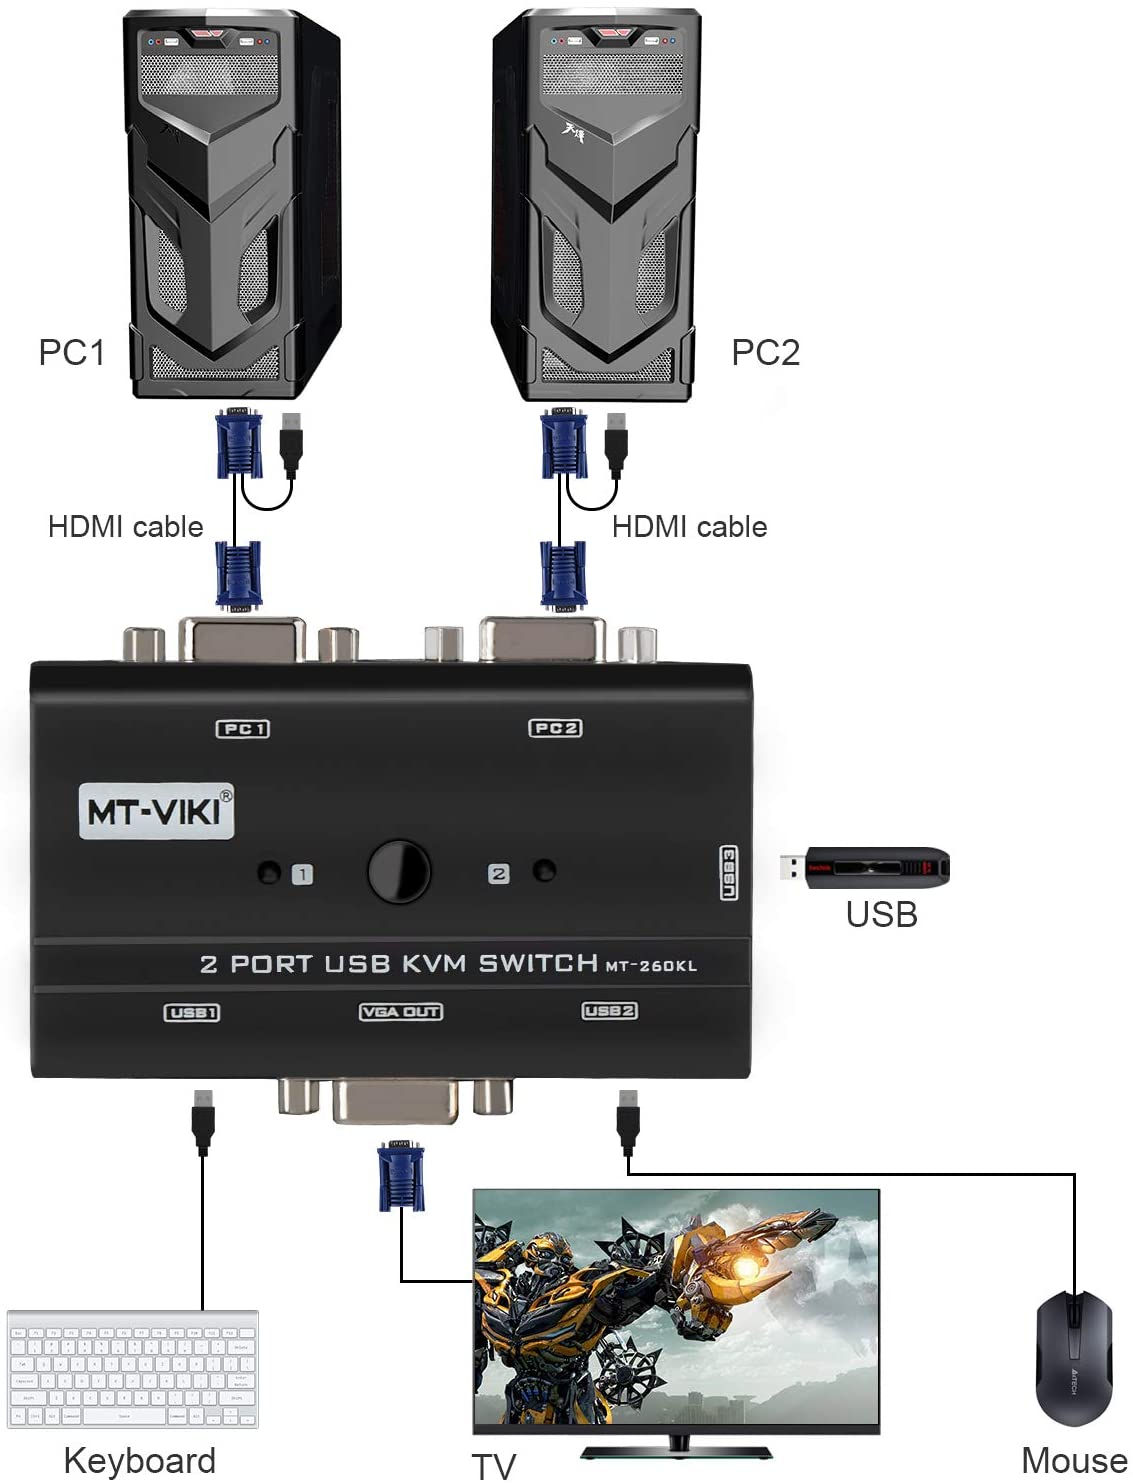 VGA KVM Switch 4 Port, USB VGA KVM Switcher for 4 Computers Share 1 Monitor  3 USB Devices Keyboard Mouse Scanner Printer, Including 4 KVM Cables 